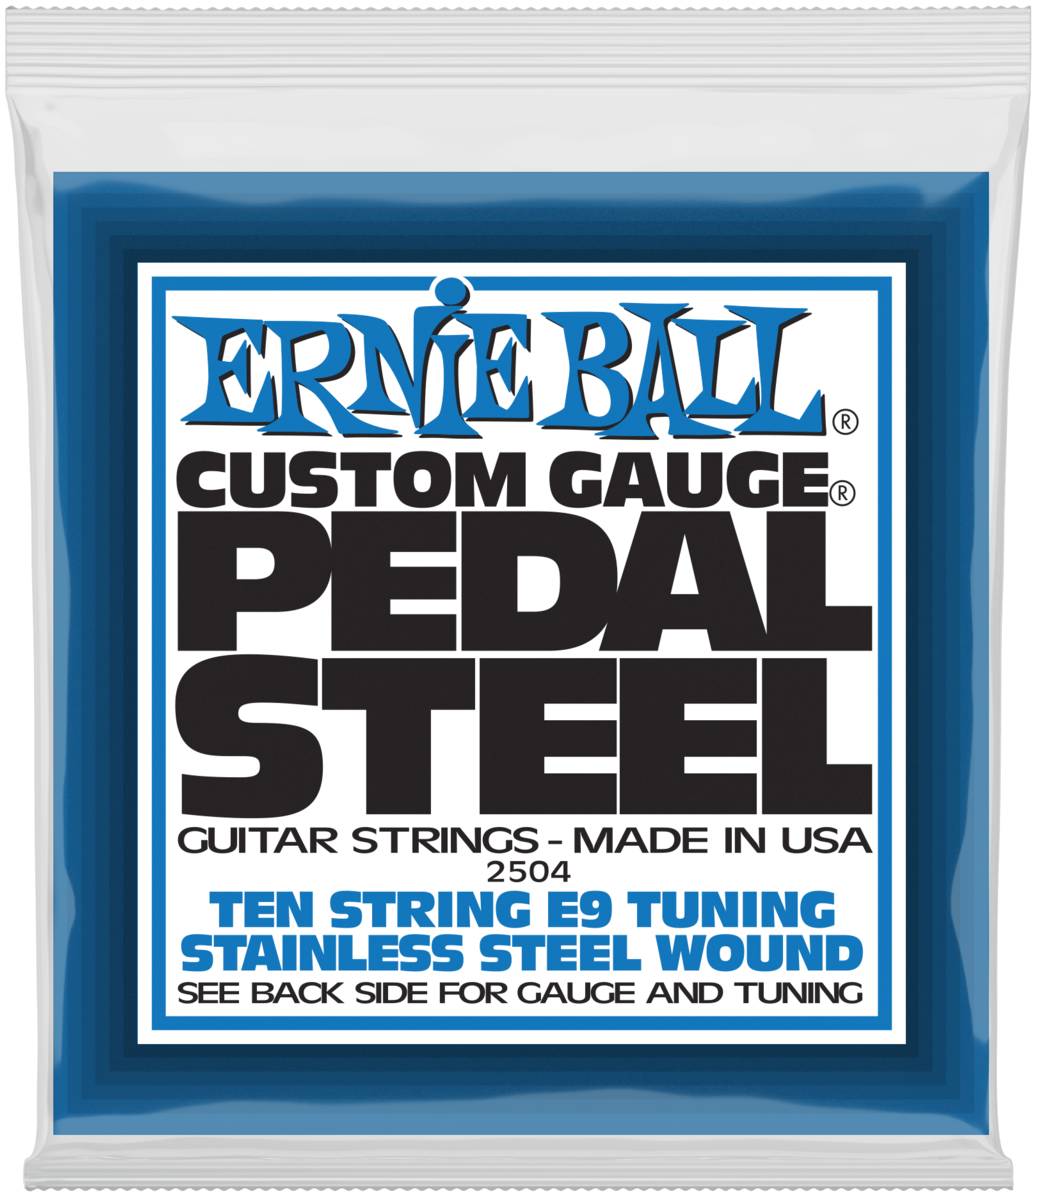 ERNIE BALL 2504 Stainless Steel E9 Tuning 13-39 - Струны для 10 струнной педальной слайд-гитары